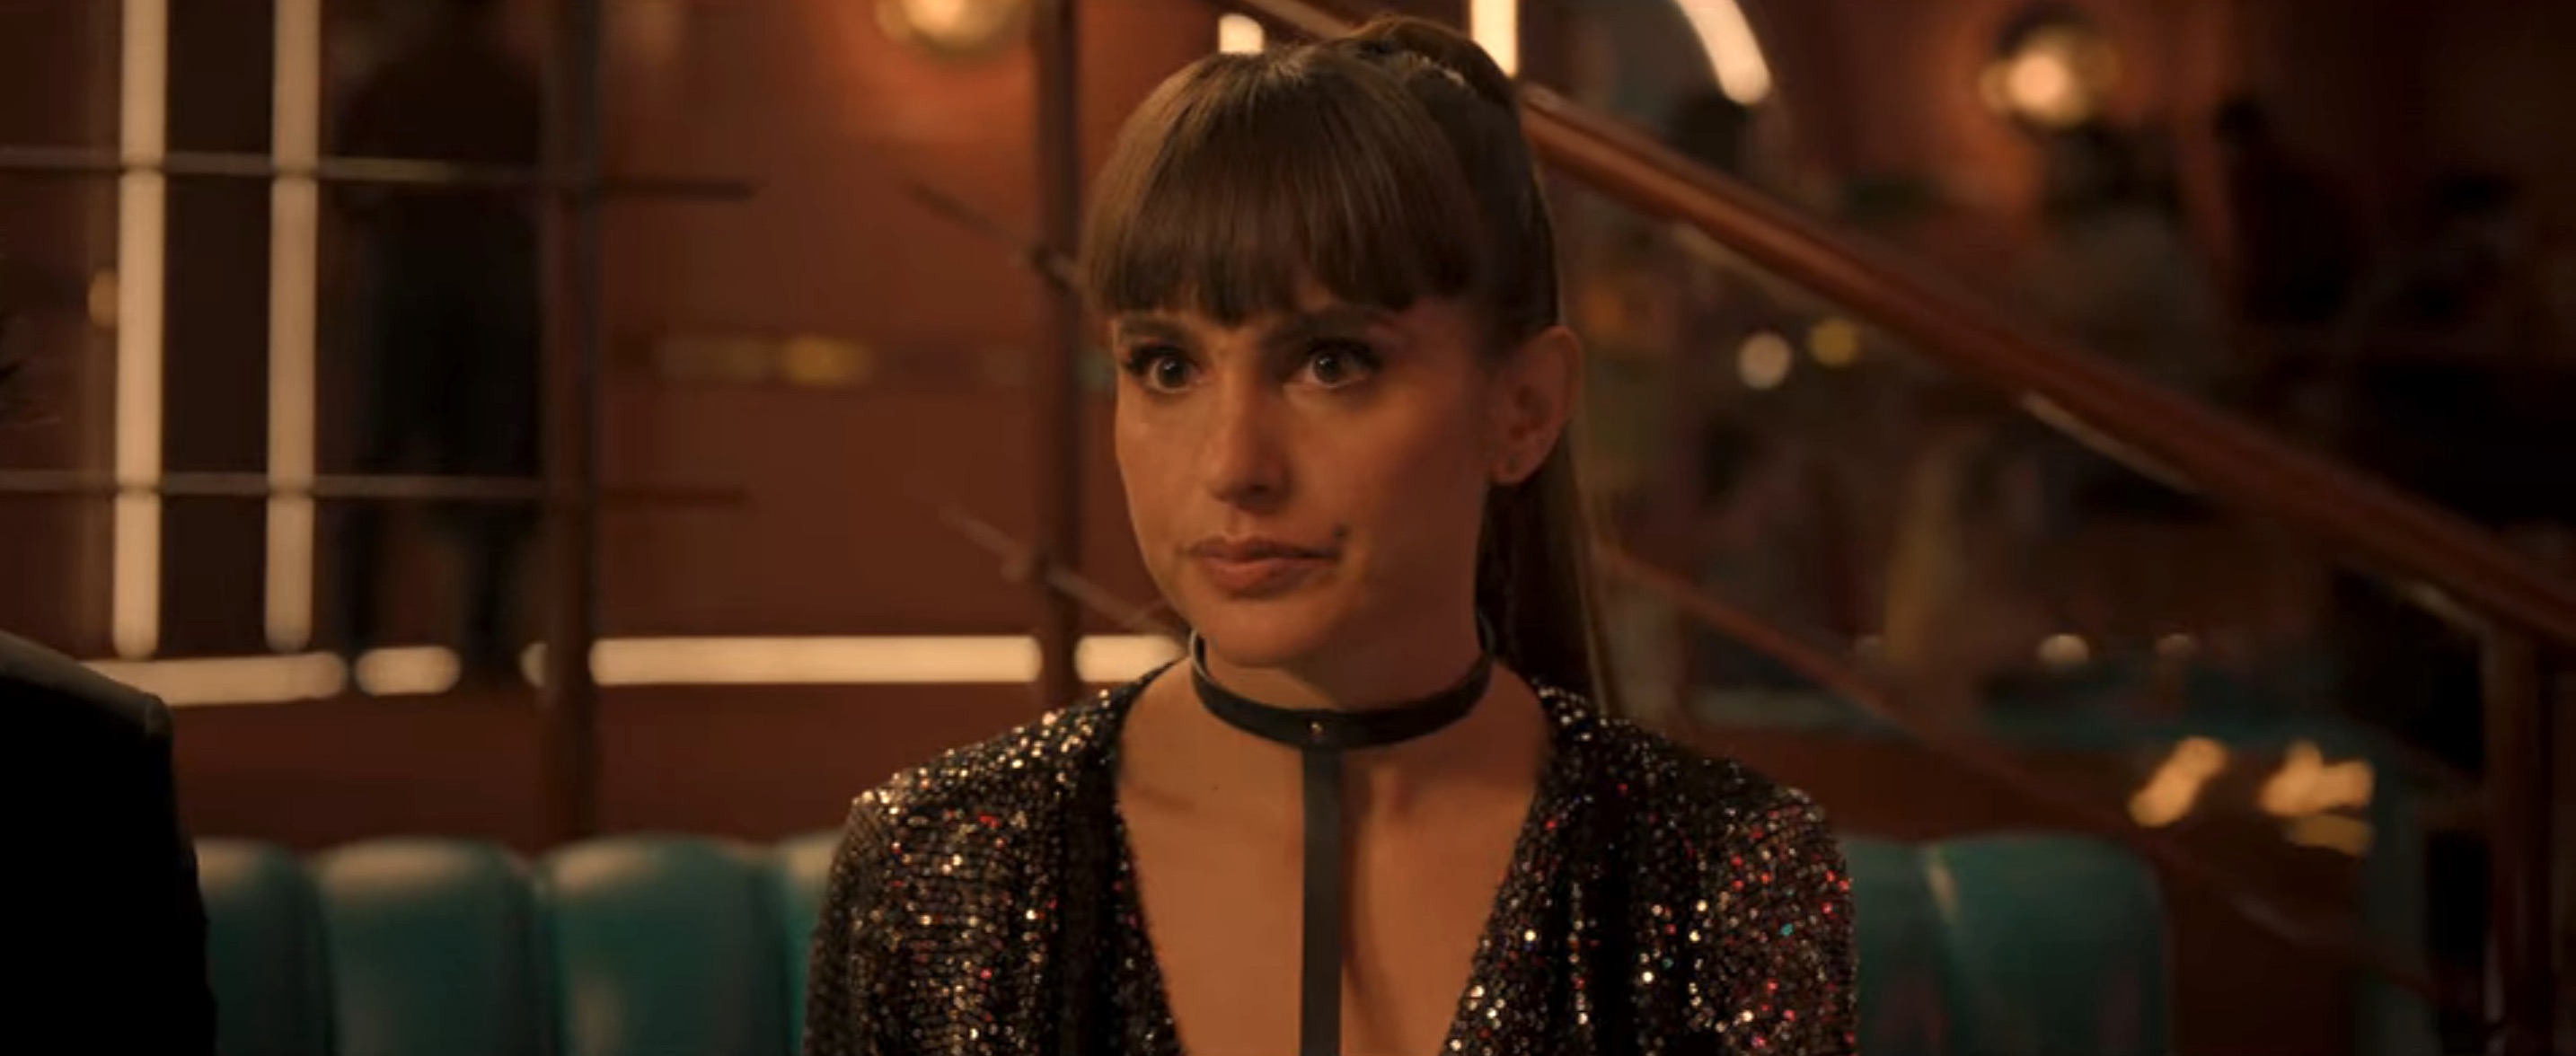 More the Merrier Cast on Netflix (Donde Caben Dos) - Verónica Echegui as Ana